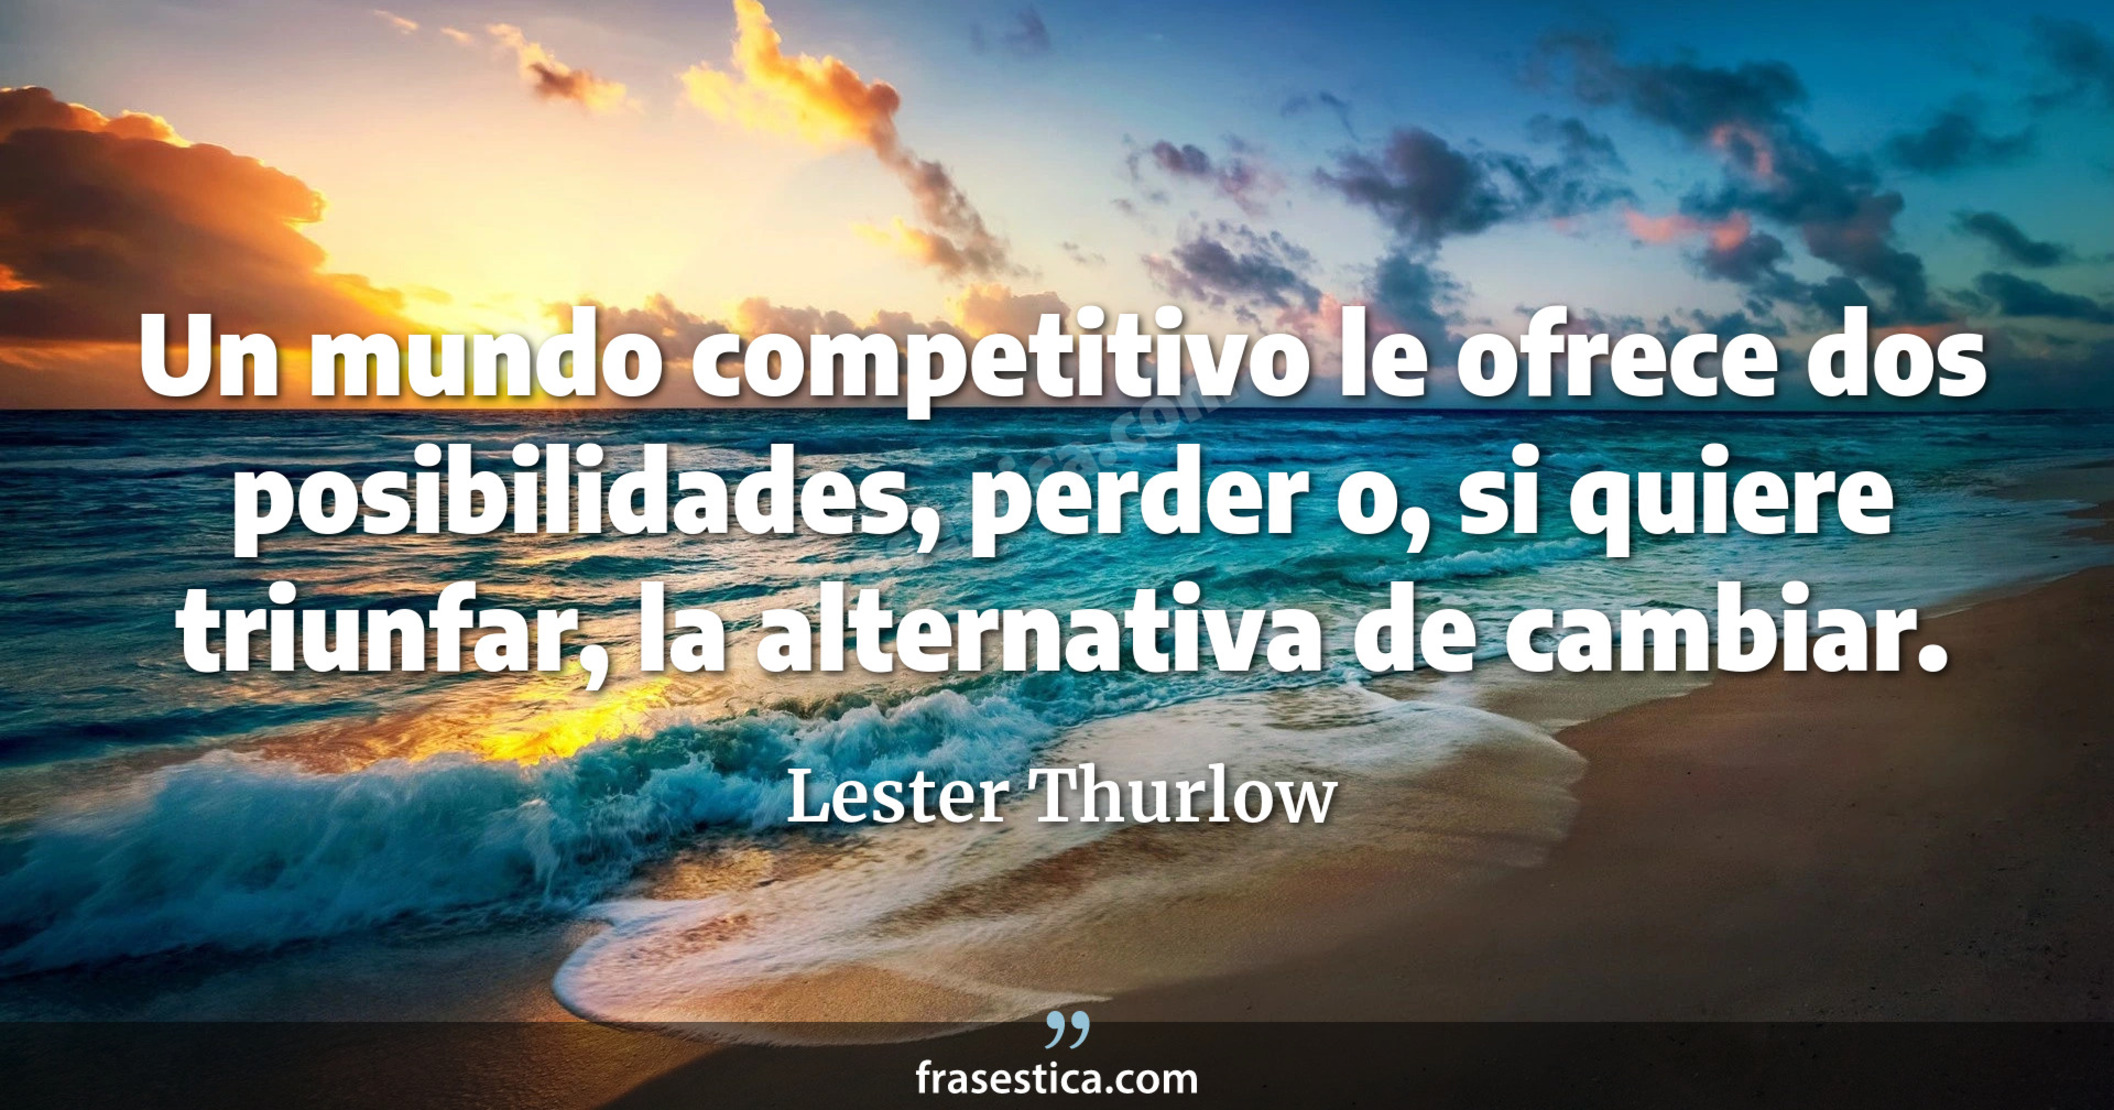 Un mundo competitivo le ofrece dos posibilidades, perder o, si quiere triunfar, la alternativa de cambiar. - Lester Thurlow